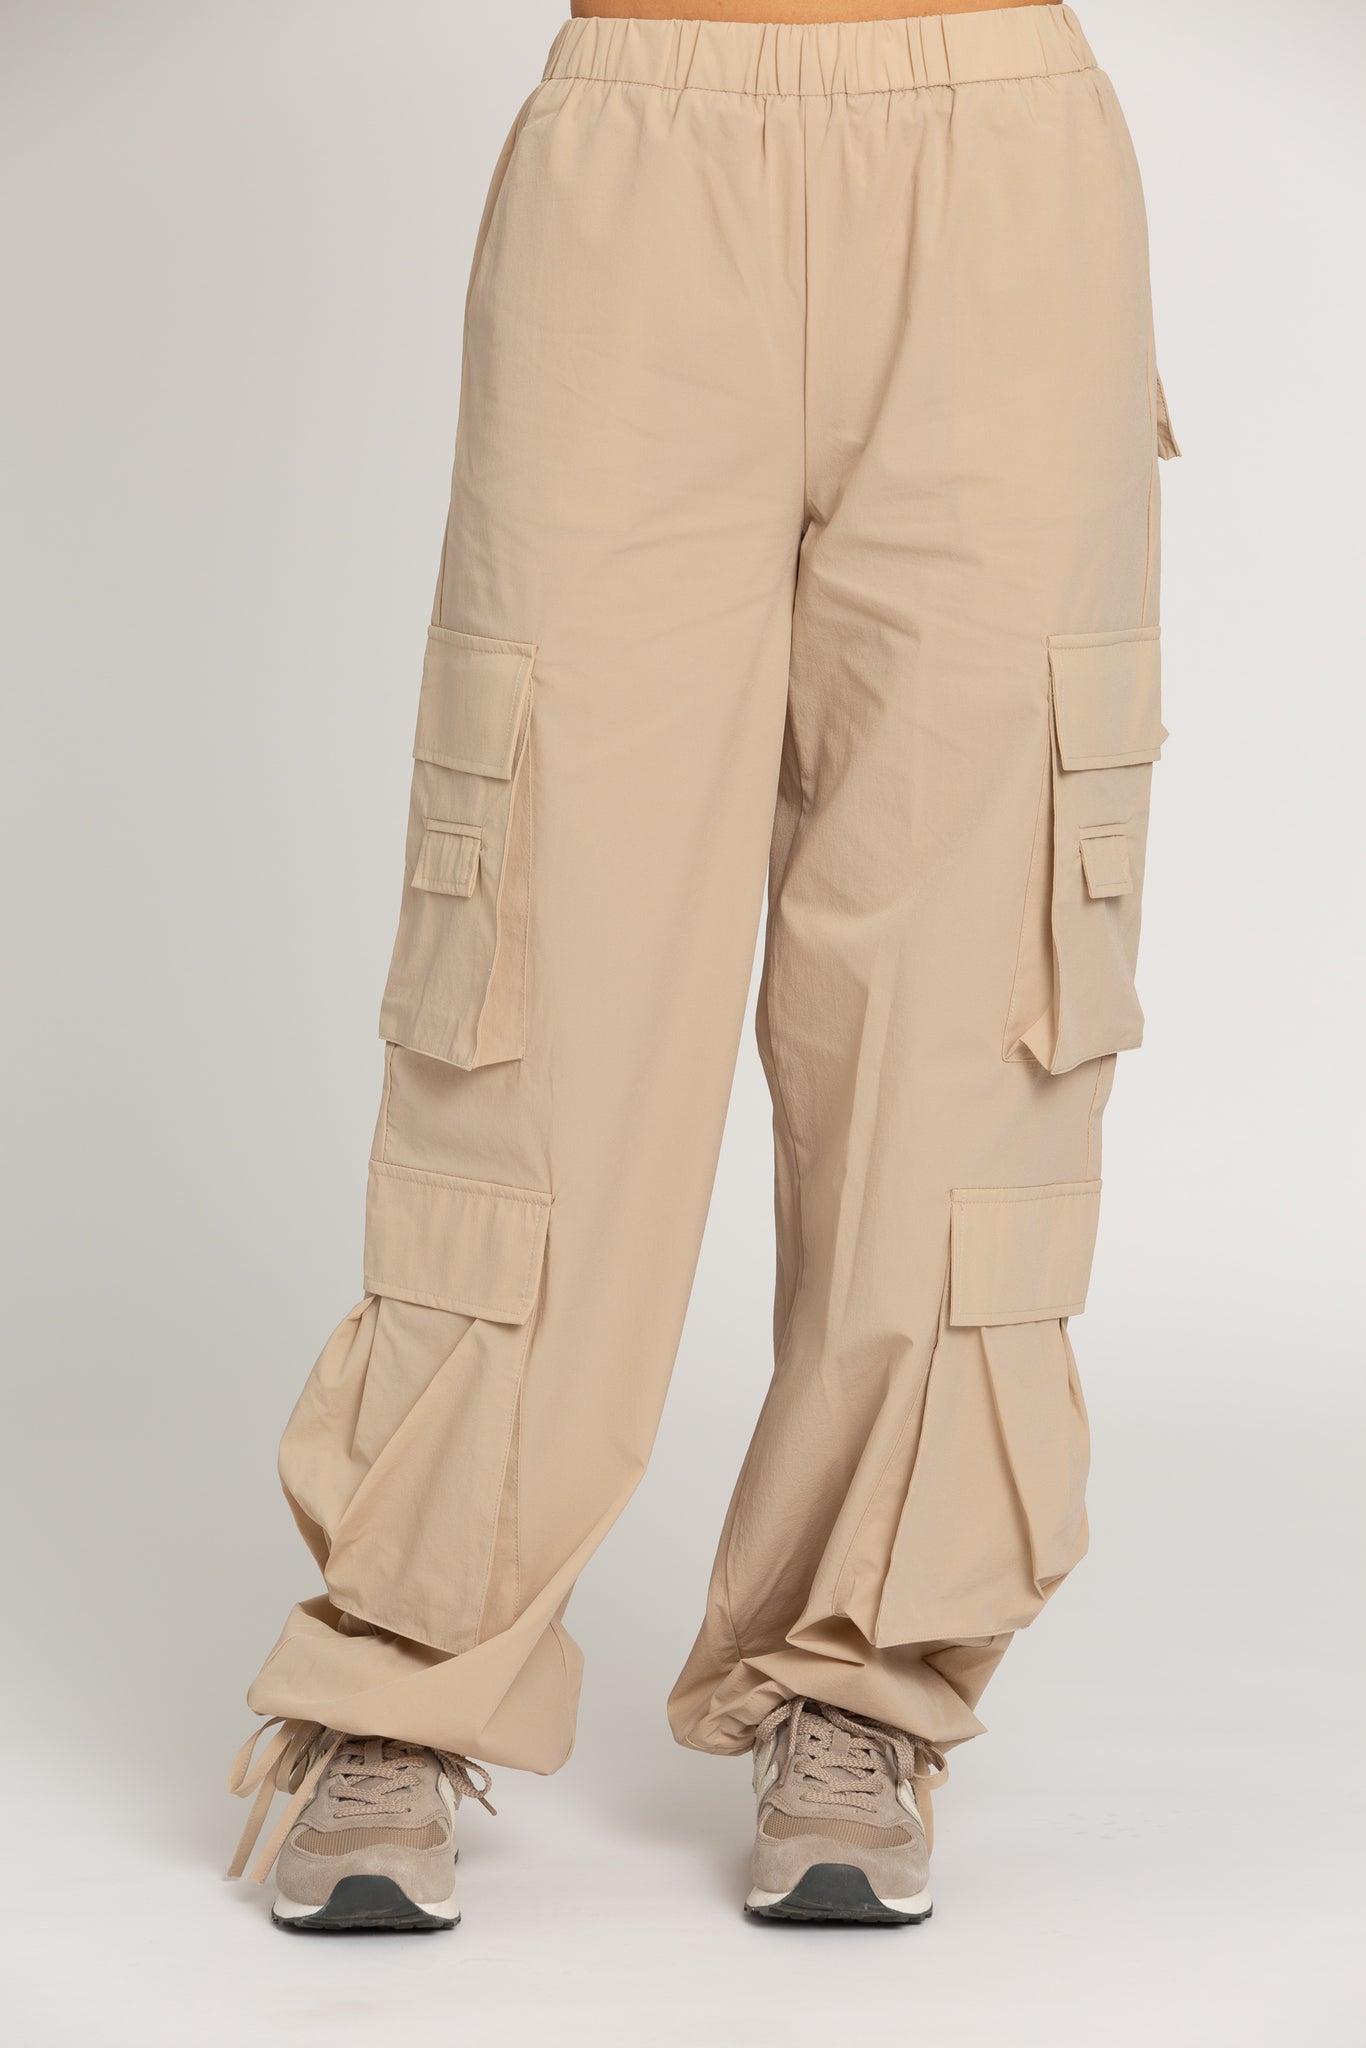 Desert Sand Parachute Pants